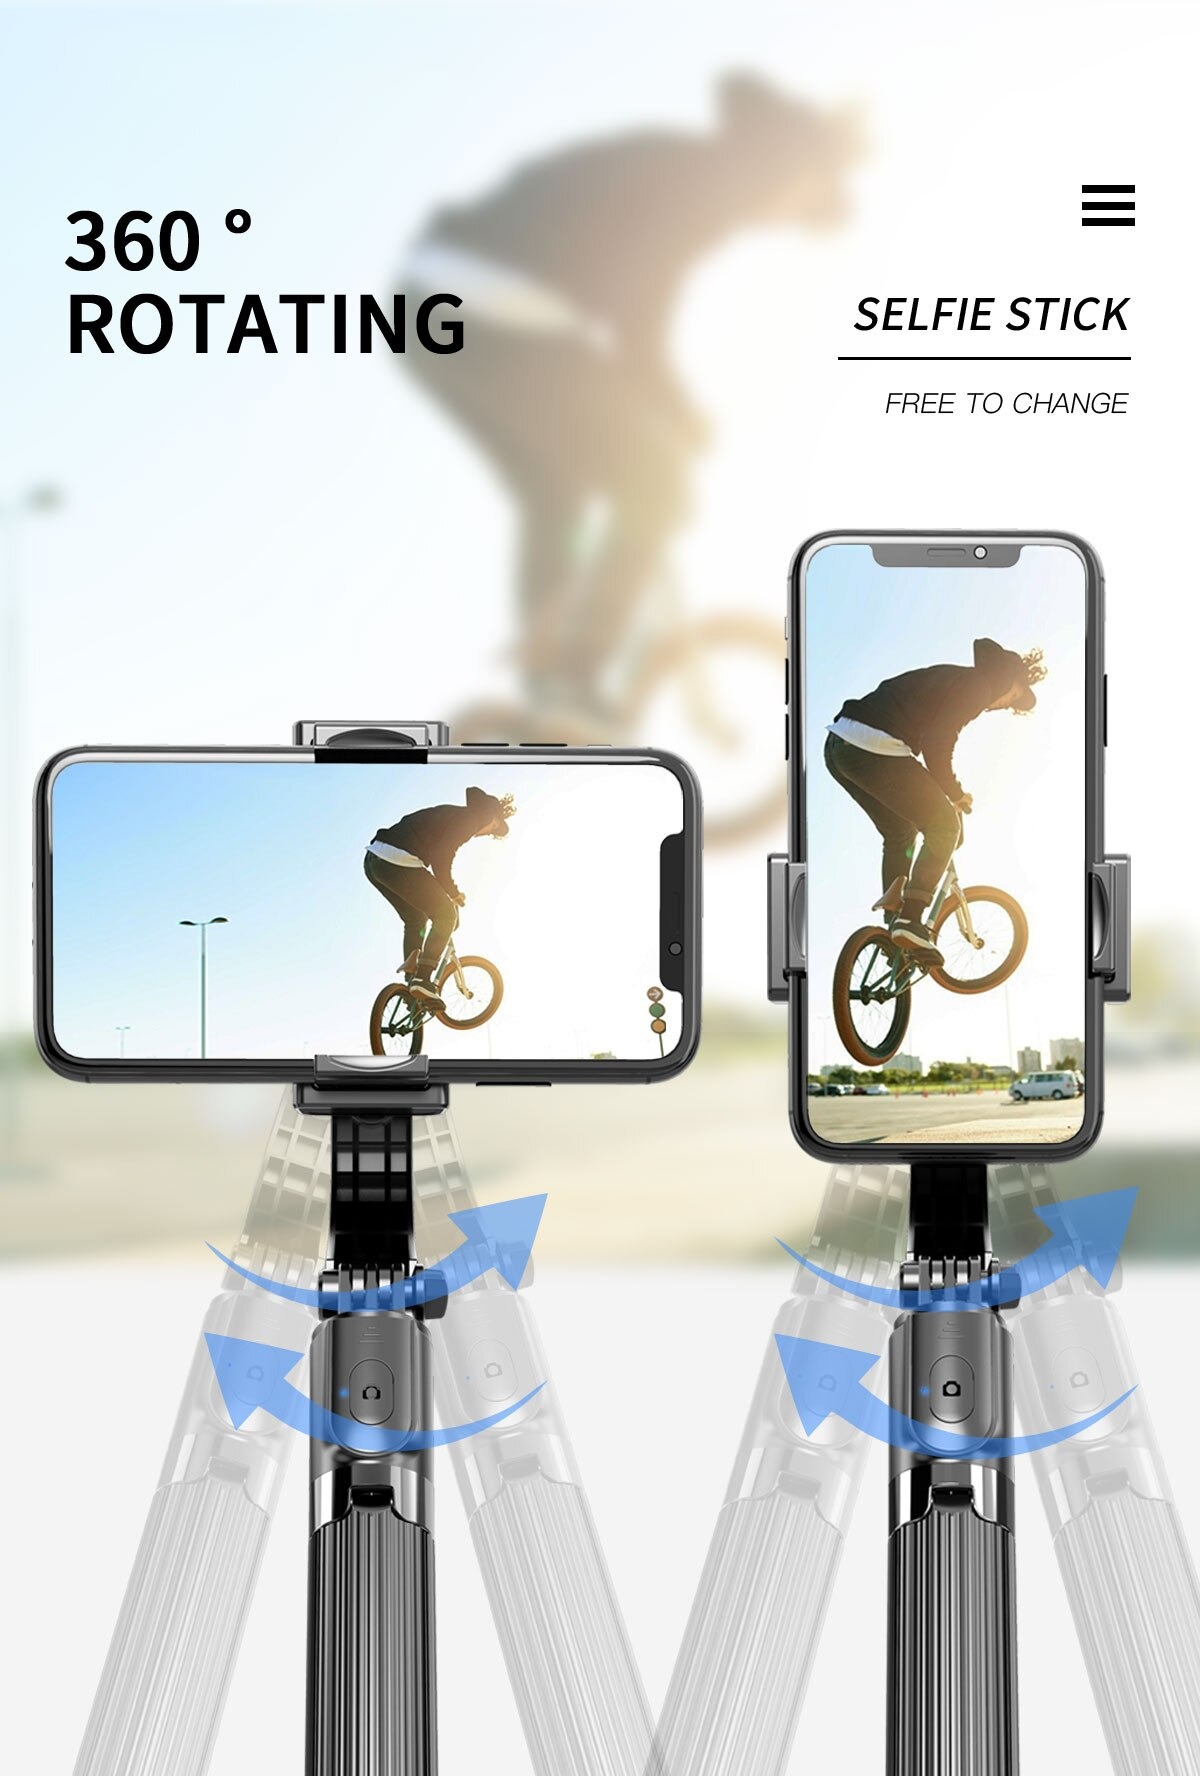 3 selfie stick gimbal stabilizers smartpho description 4